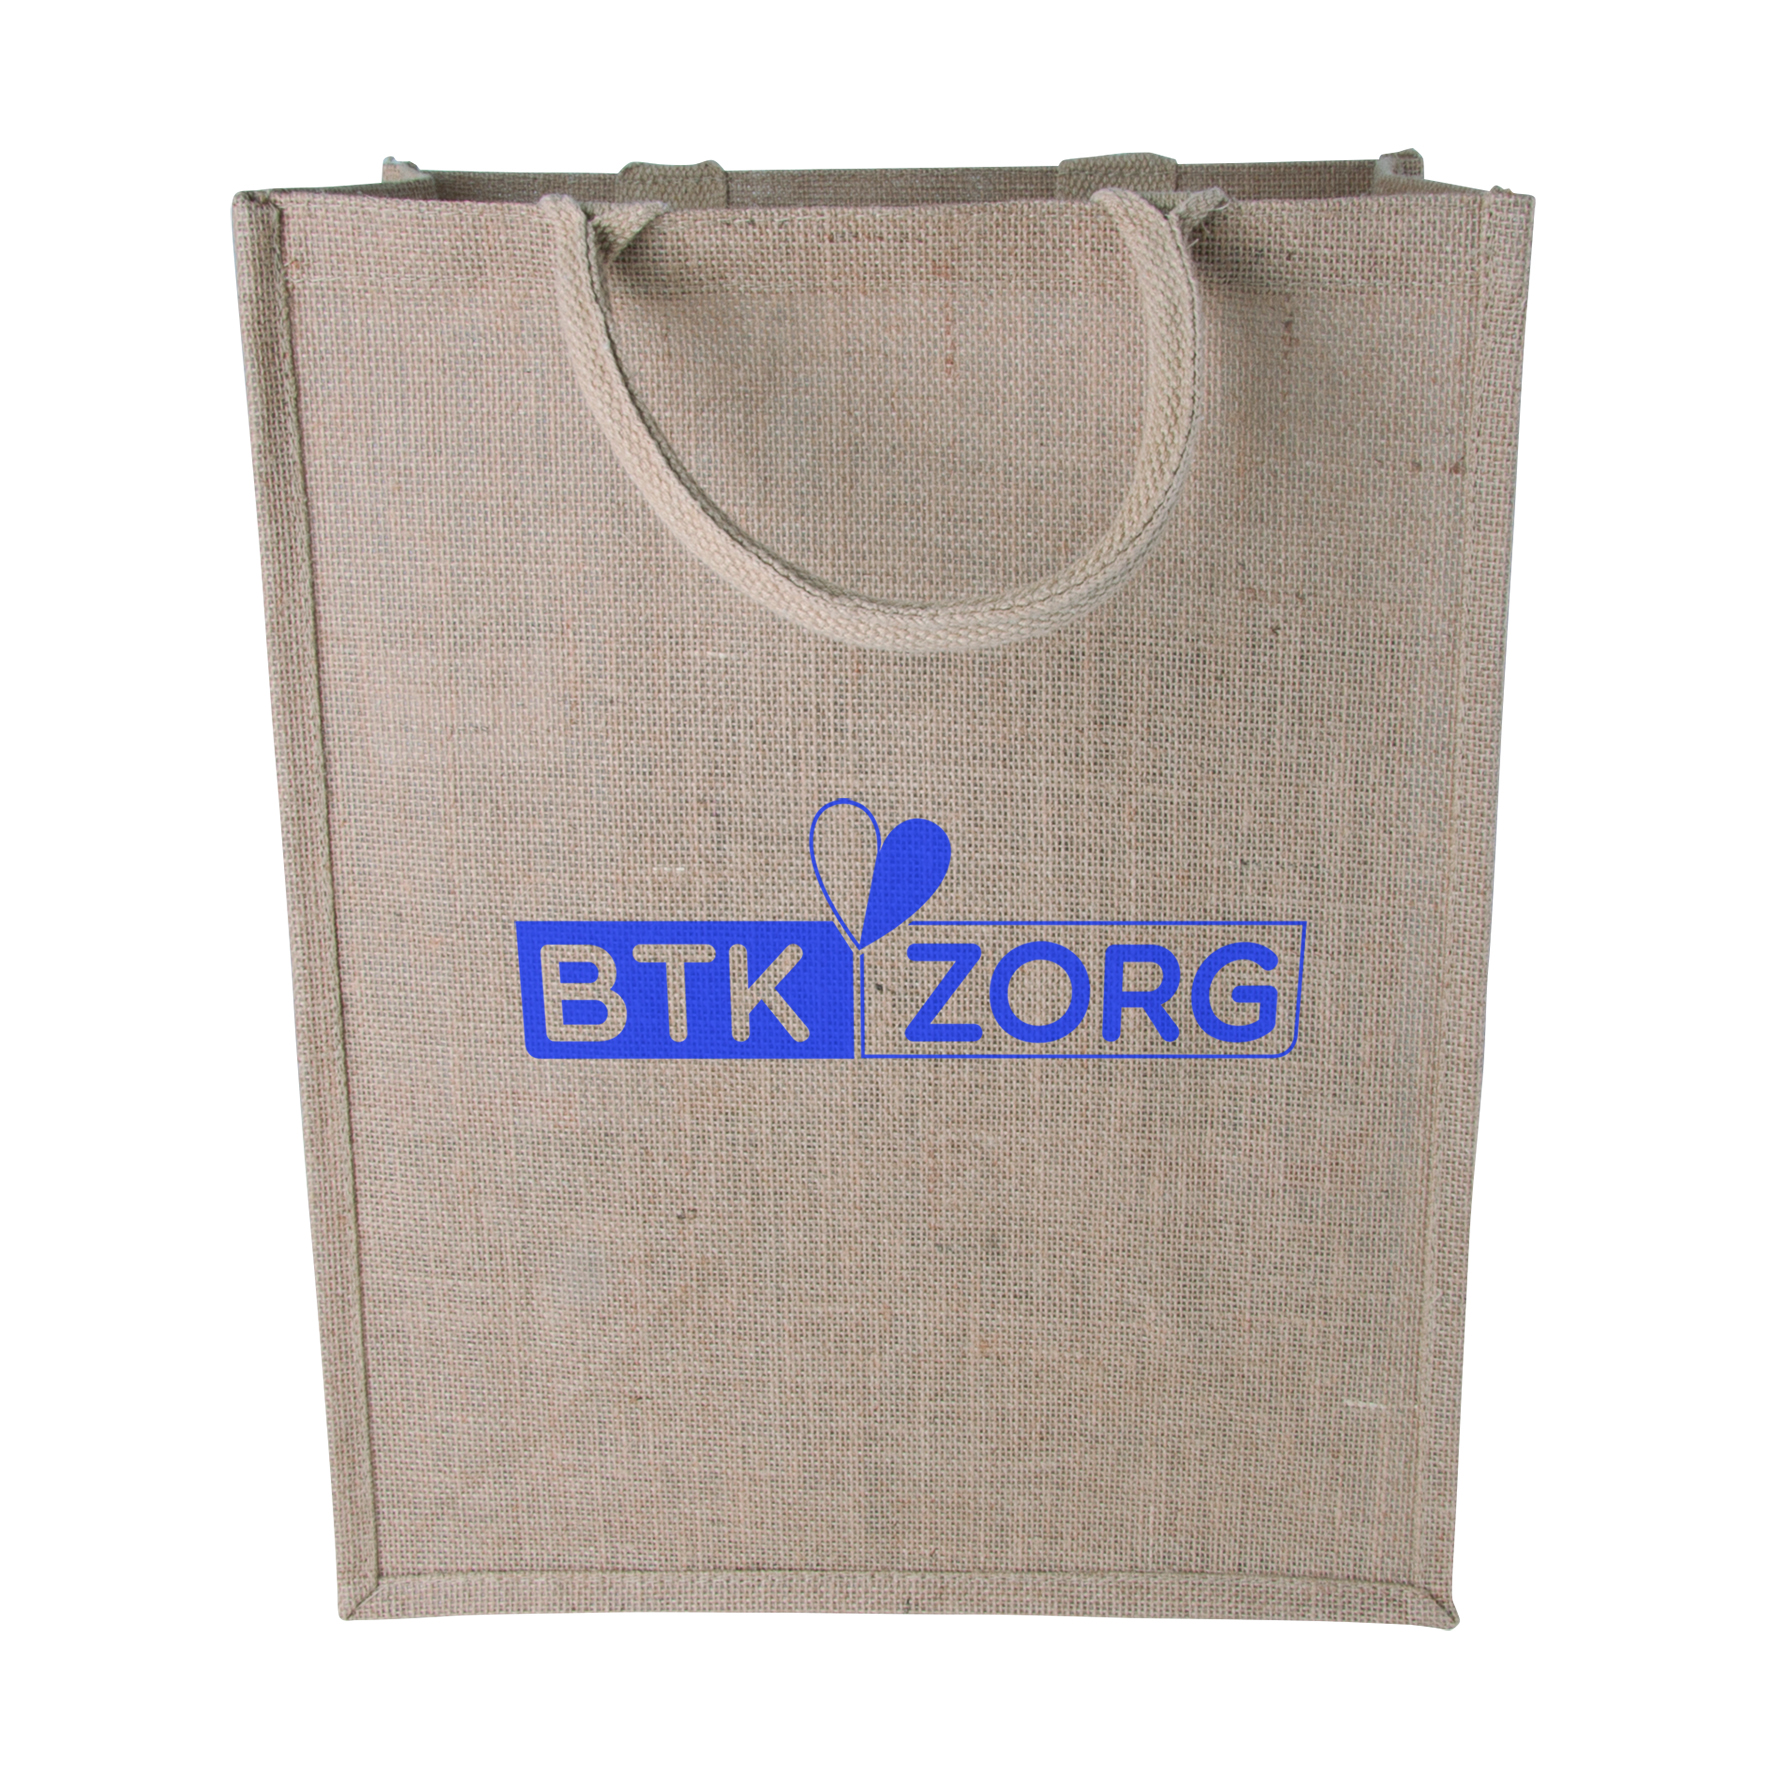 x201211 11 - Jute bag laying model